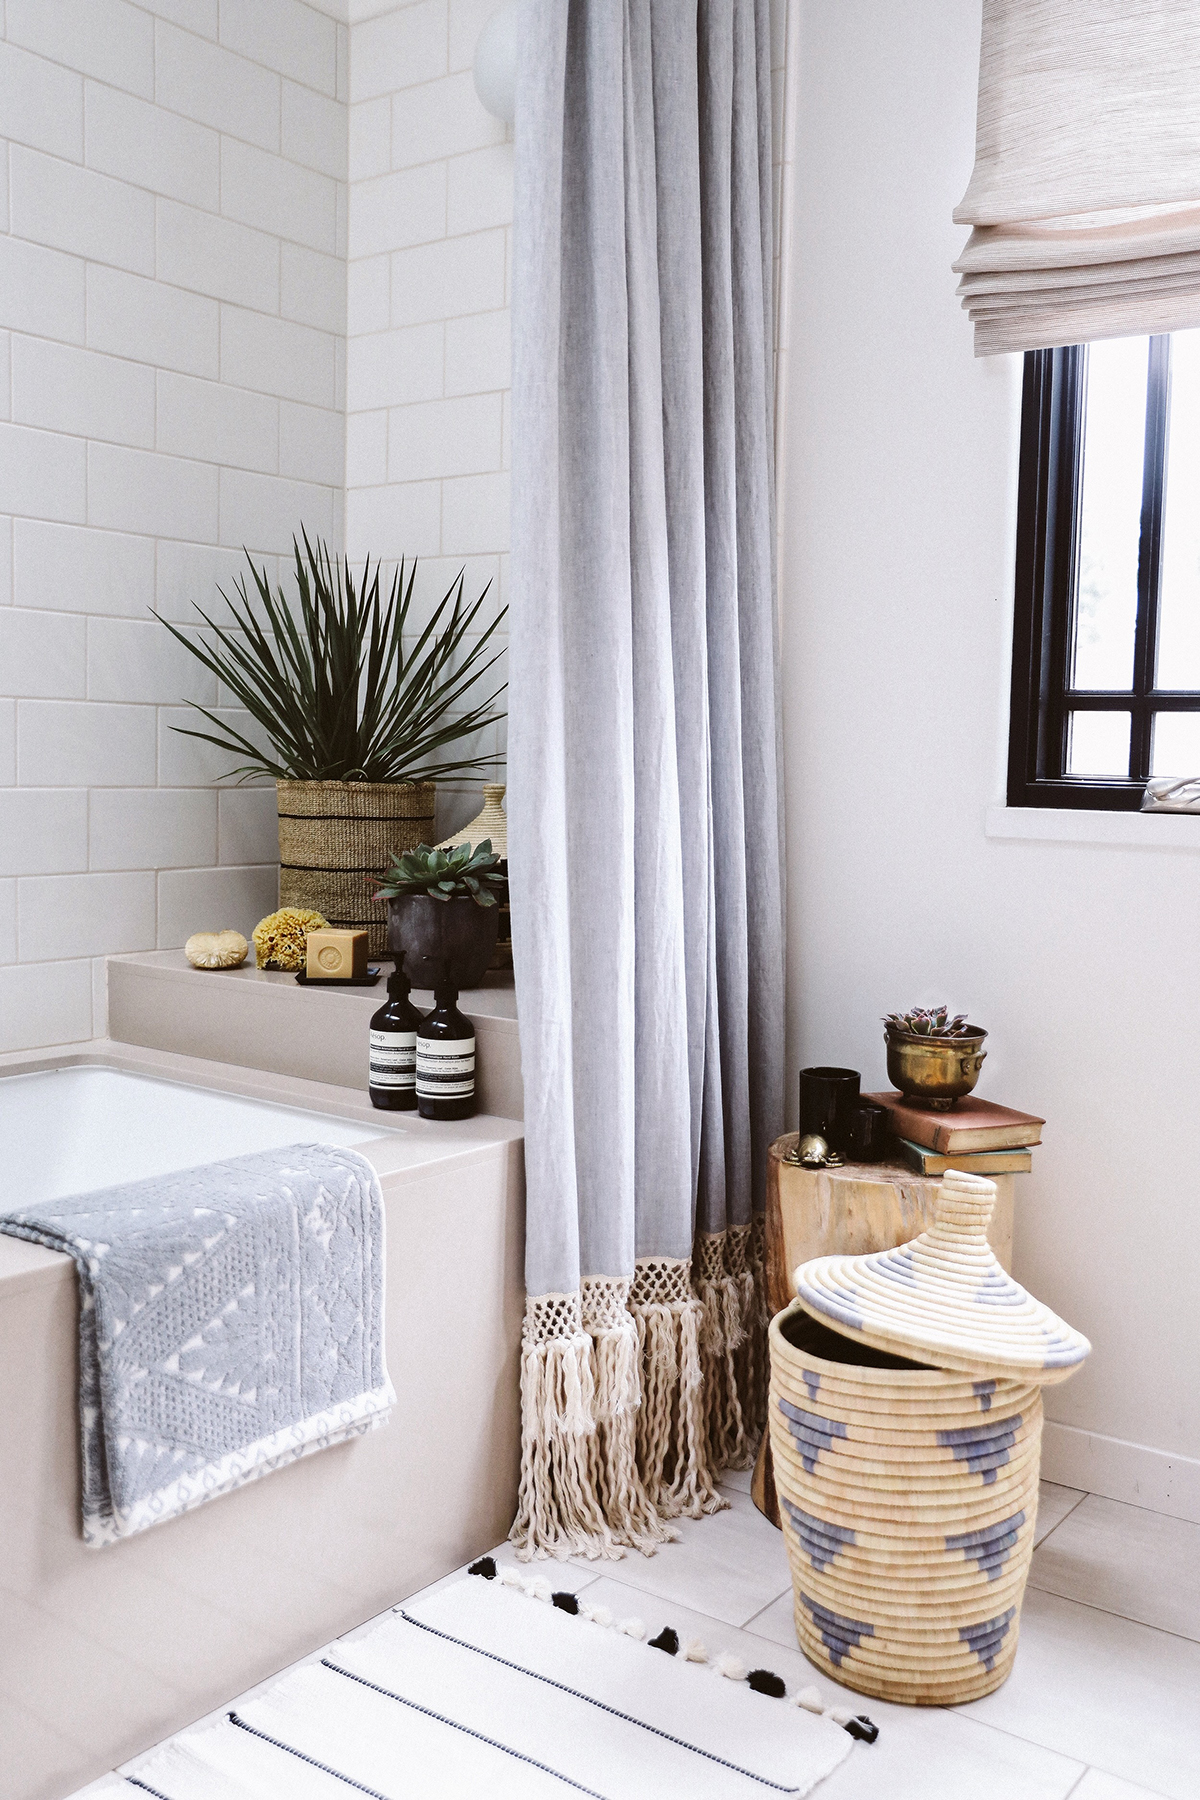 Diy Extra Long Shower Curtain, Double Shower Curtain Ideas